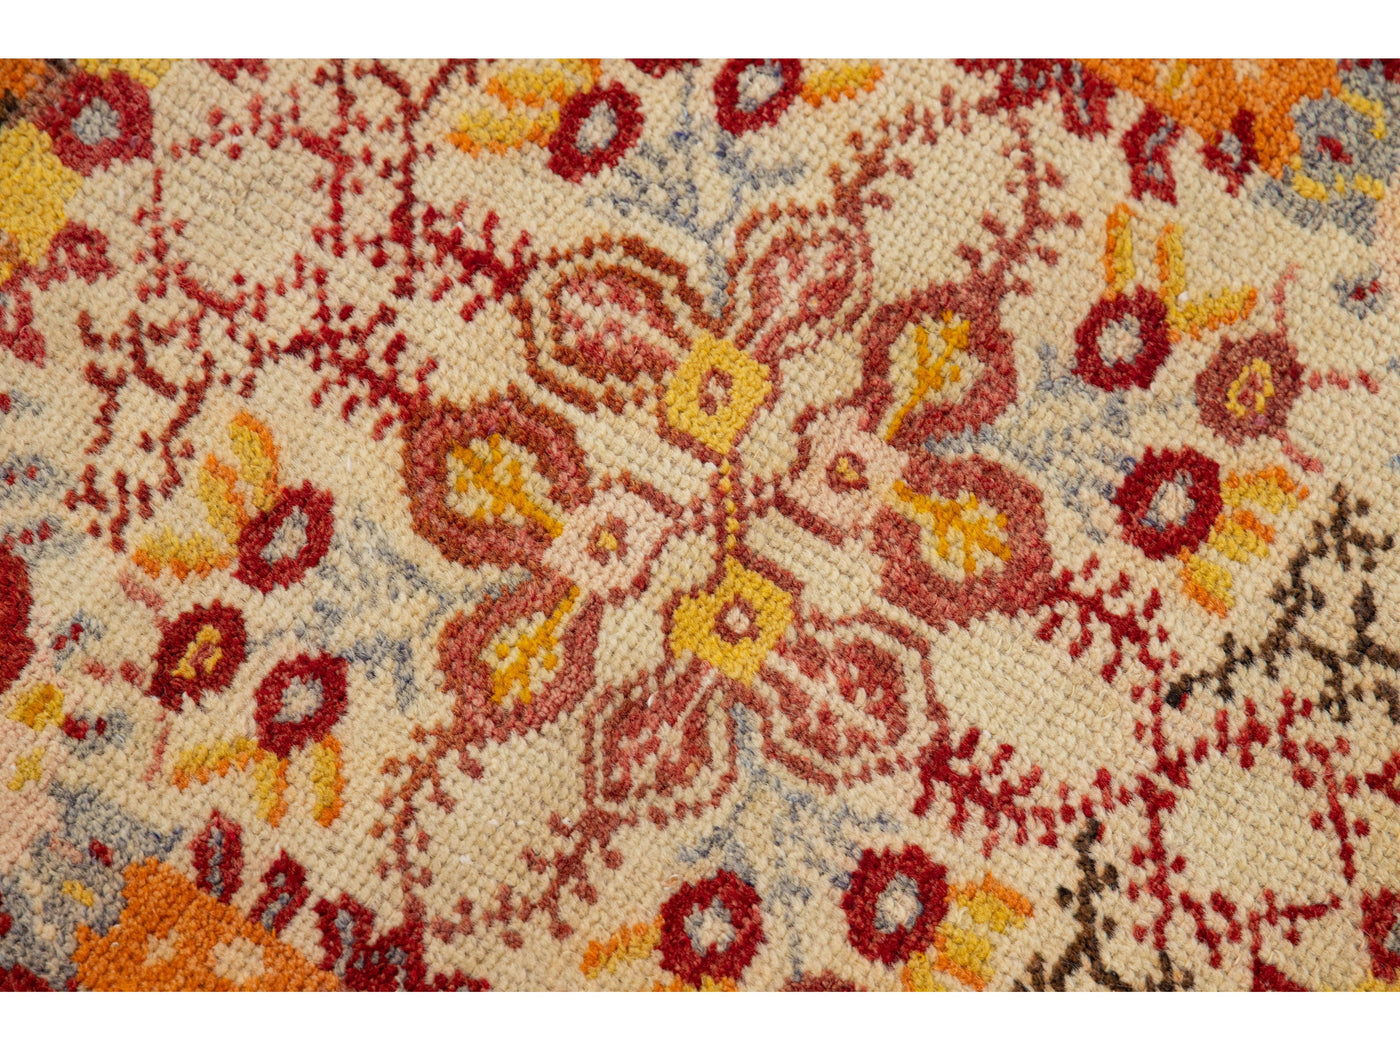 Antique Khotan Wool Rug 3 X 6